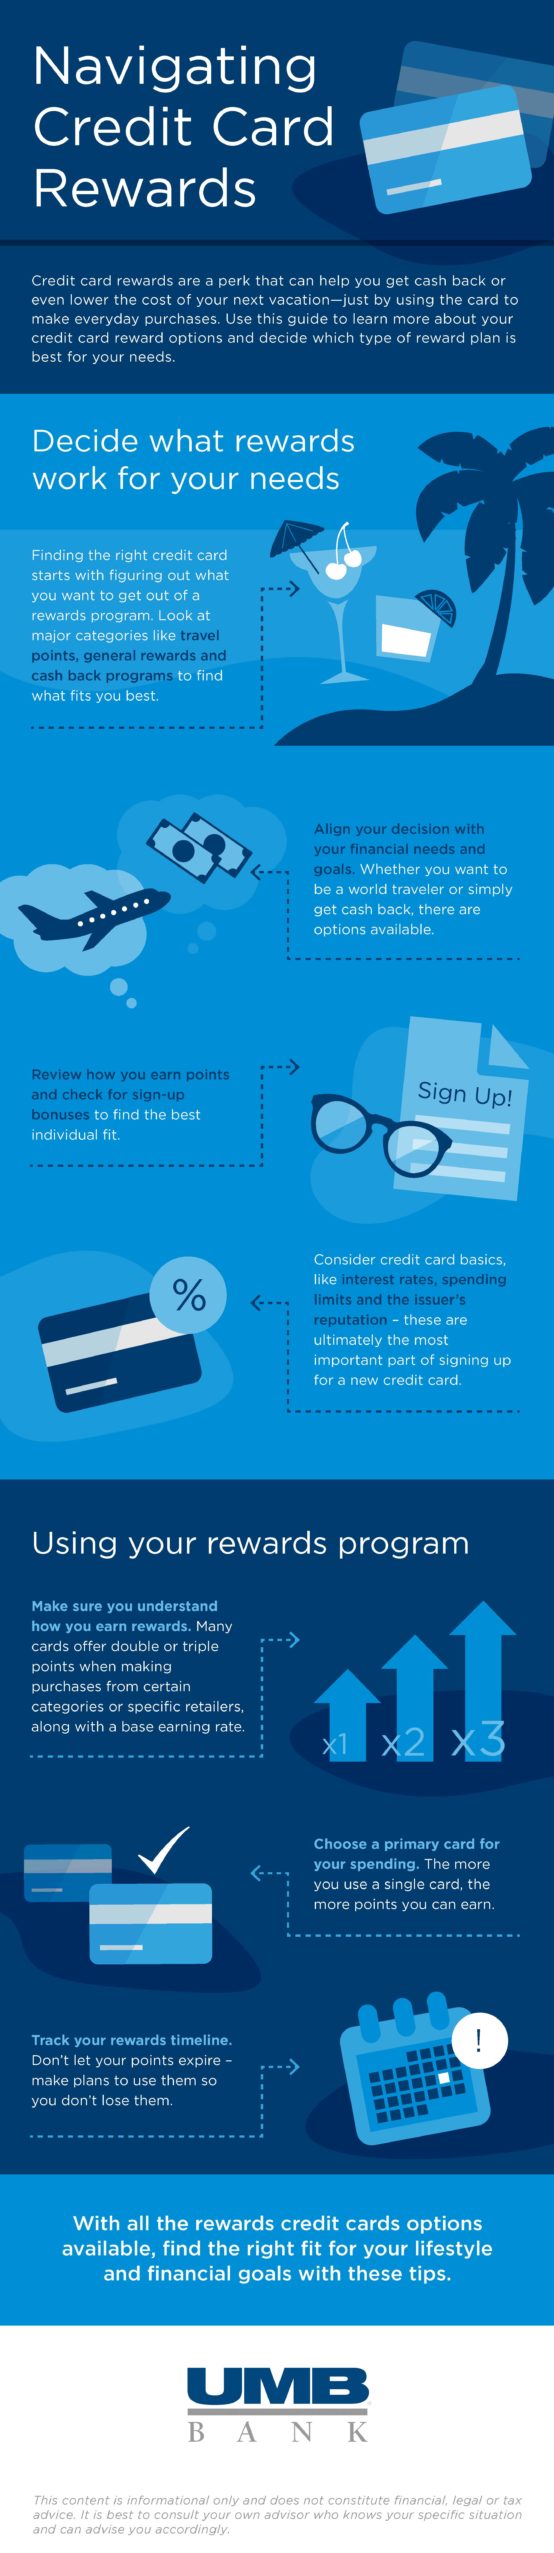 Navigating credit card rewards infographic image scaled